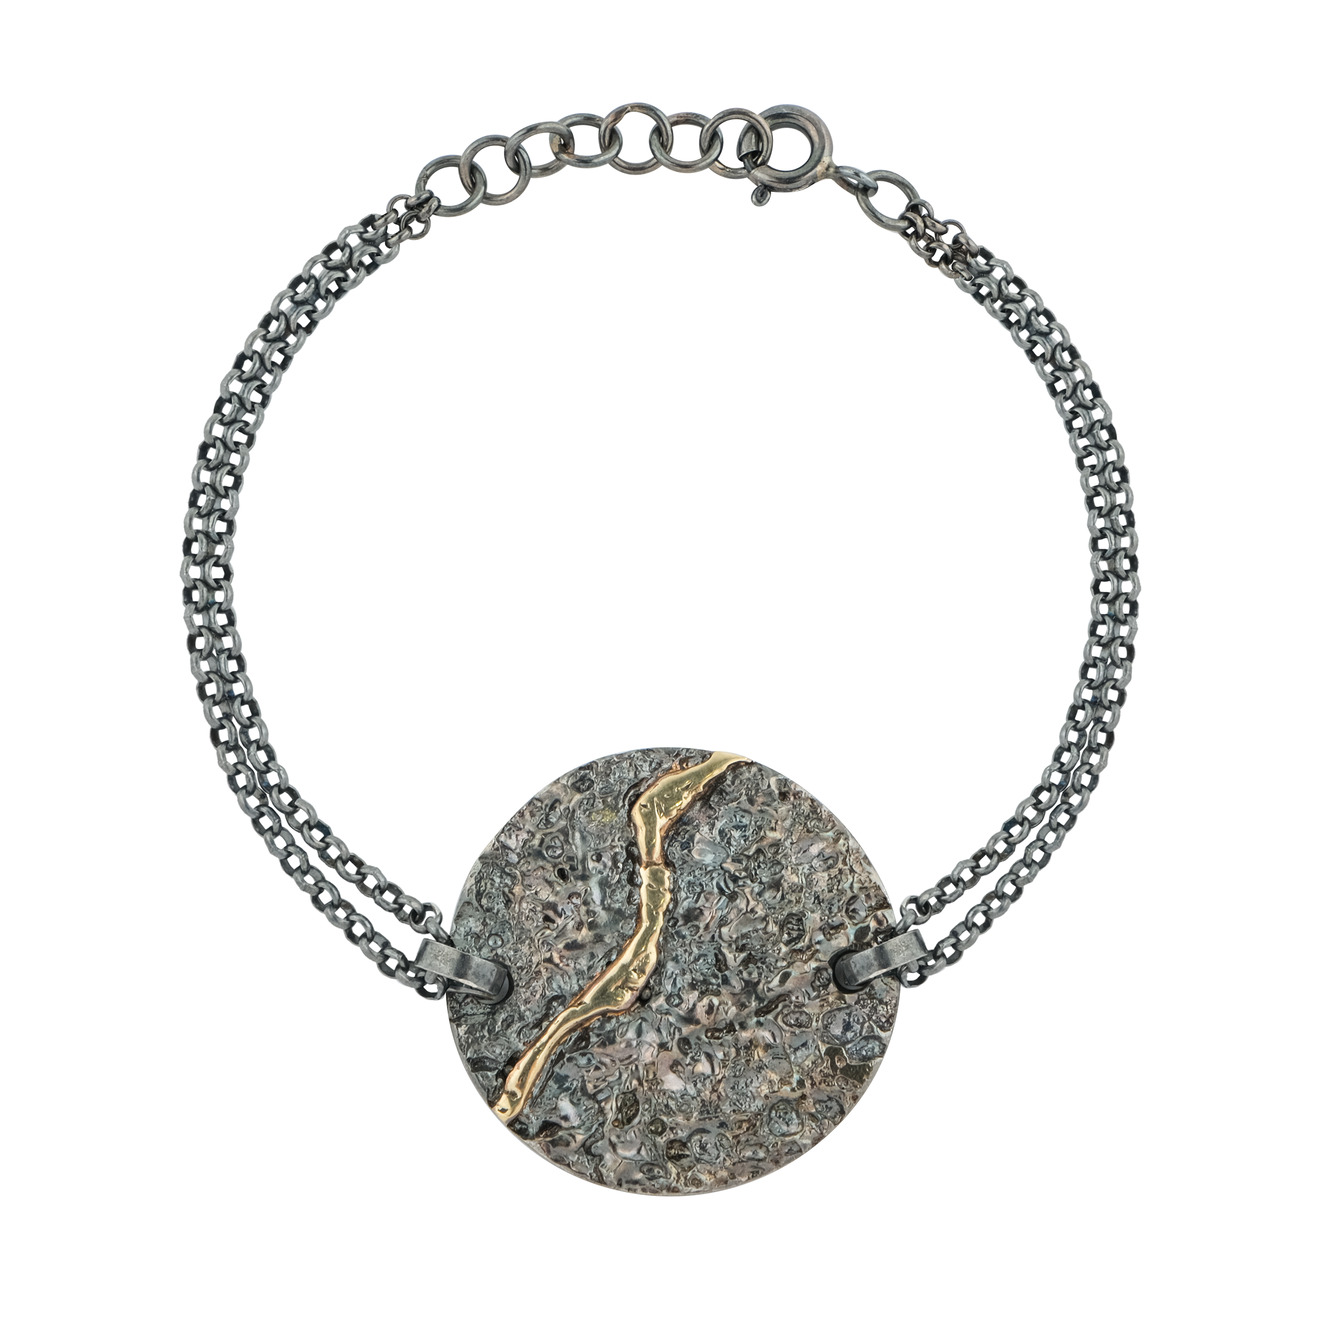 Kintsugi Jewelry Браслет Volcanic power из серебра со вставкой из золота